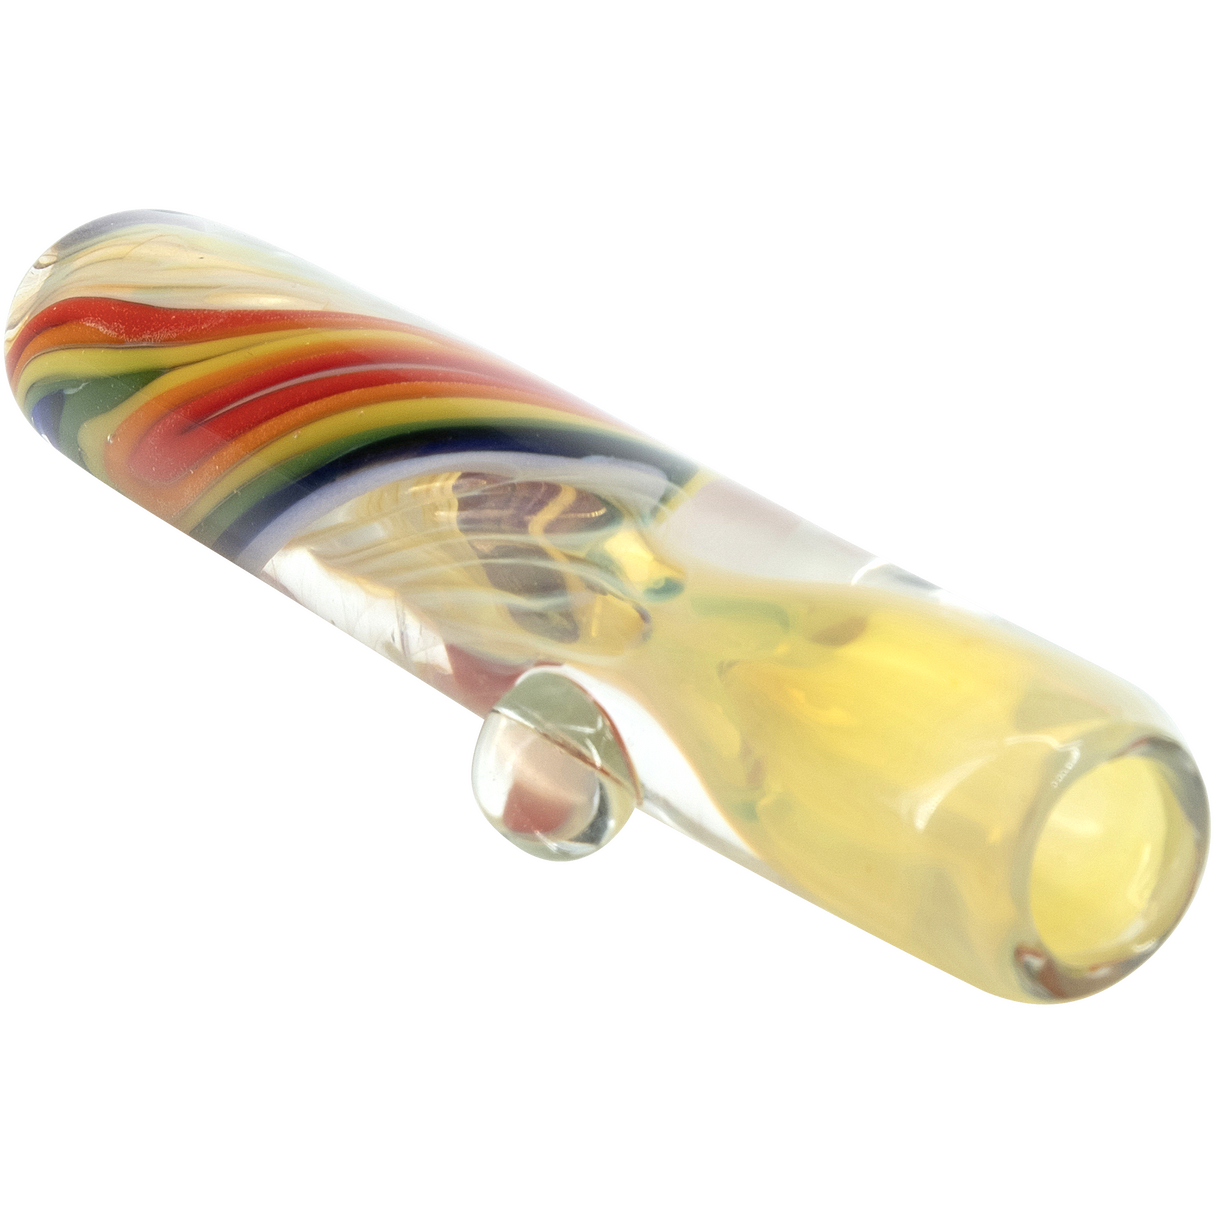 LA Pipes "Rainbow Fume" Chillum Pipe